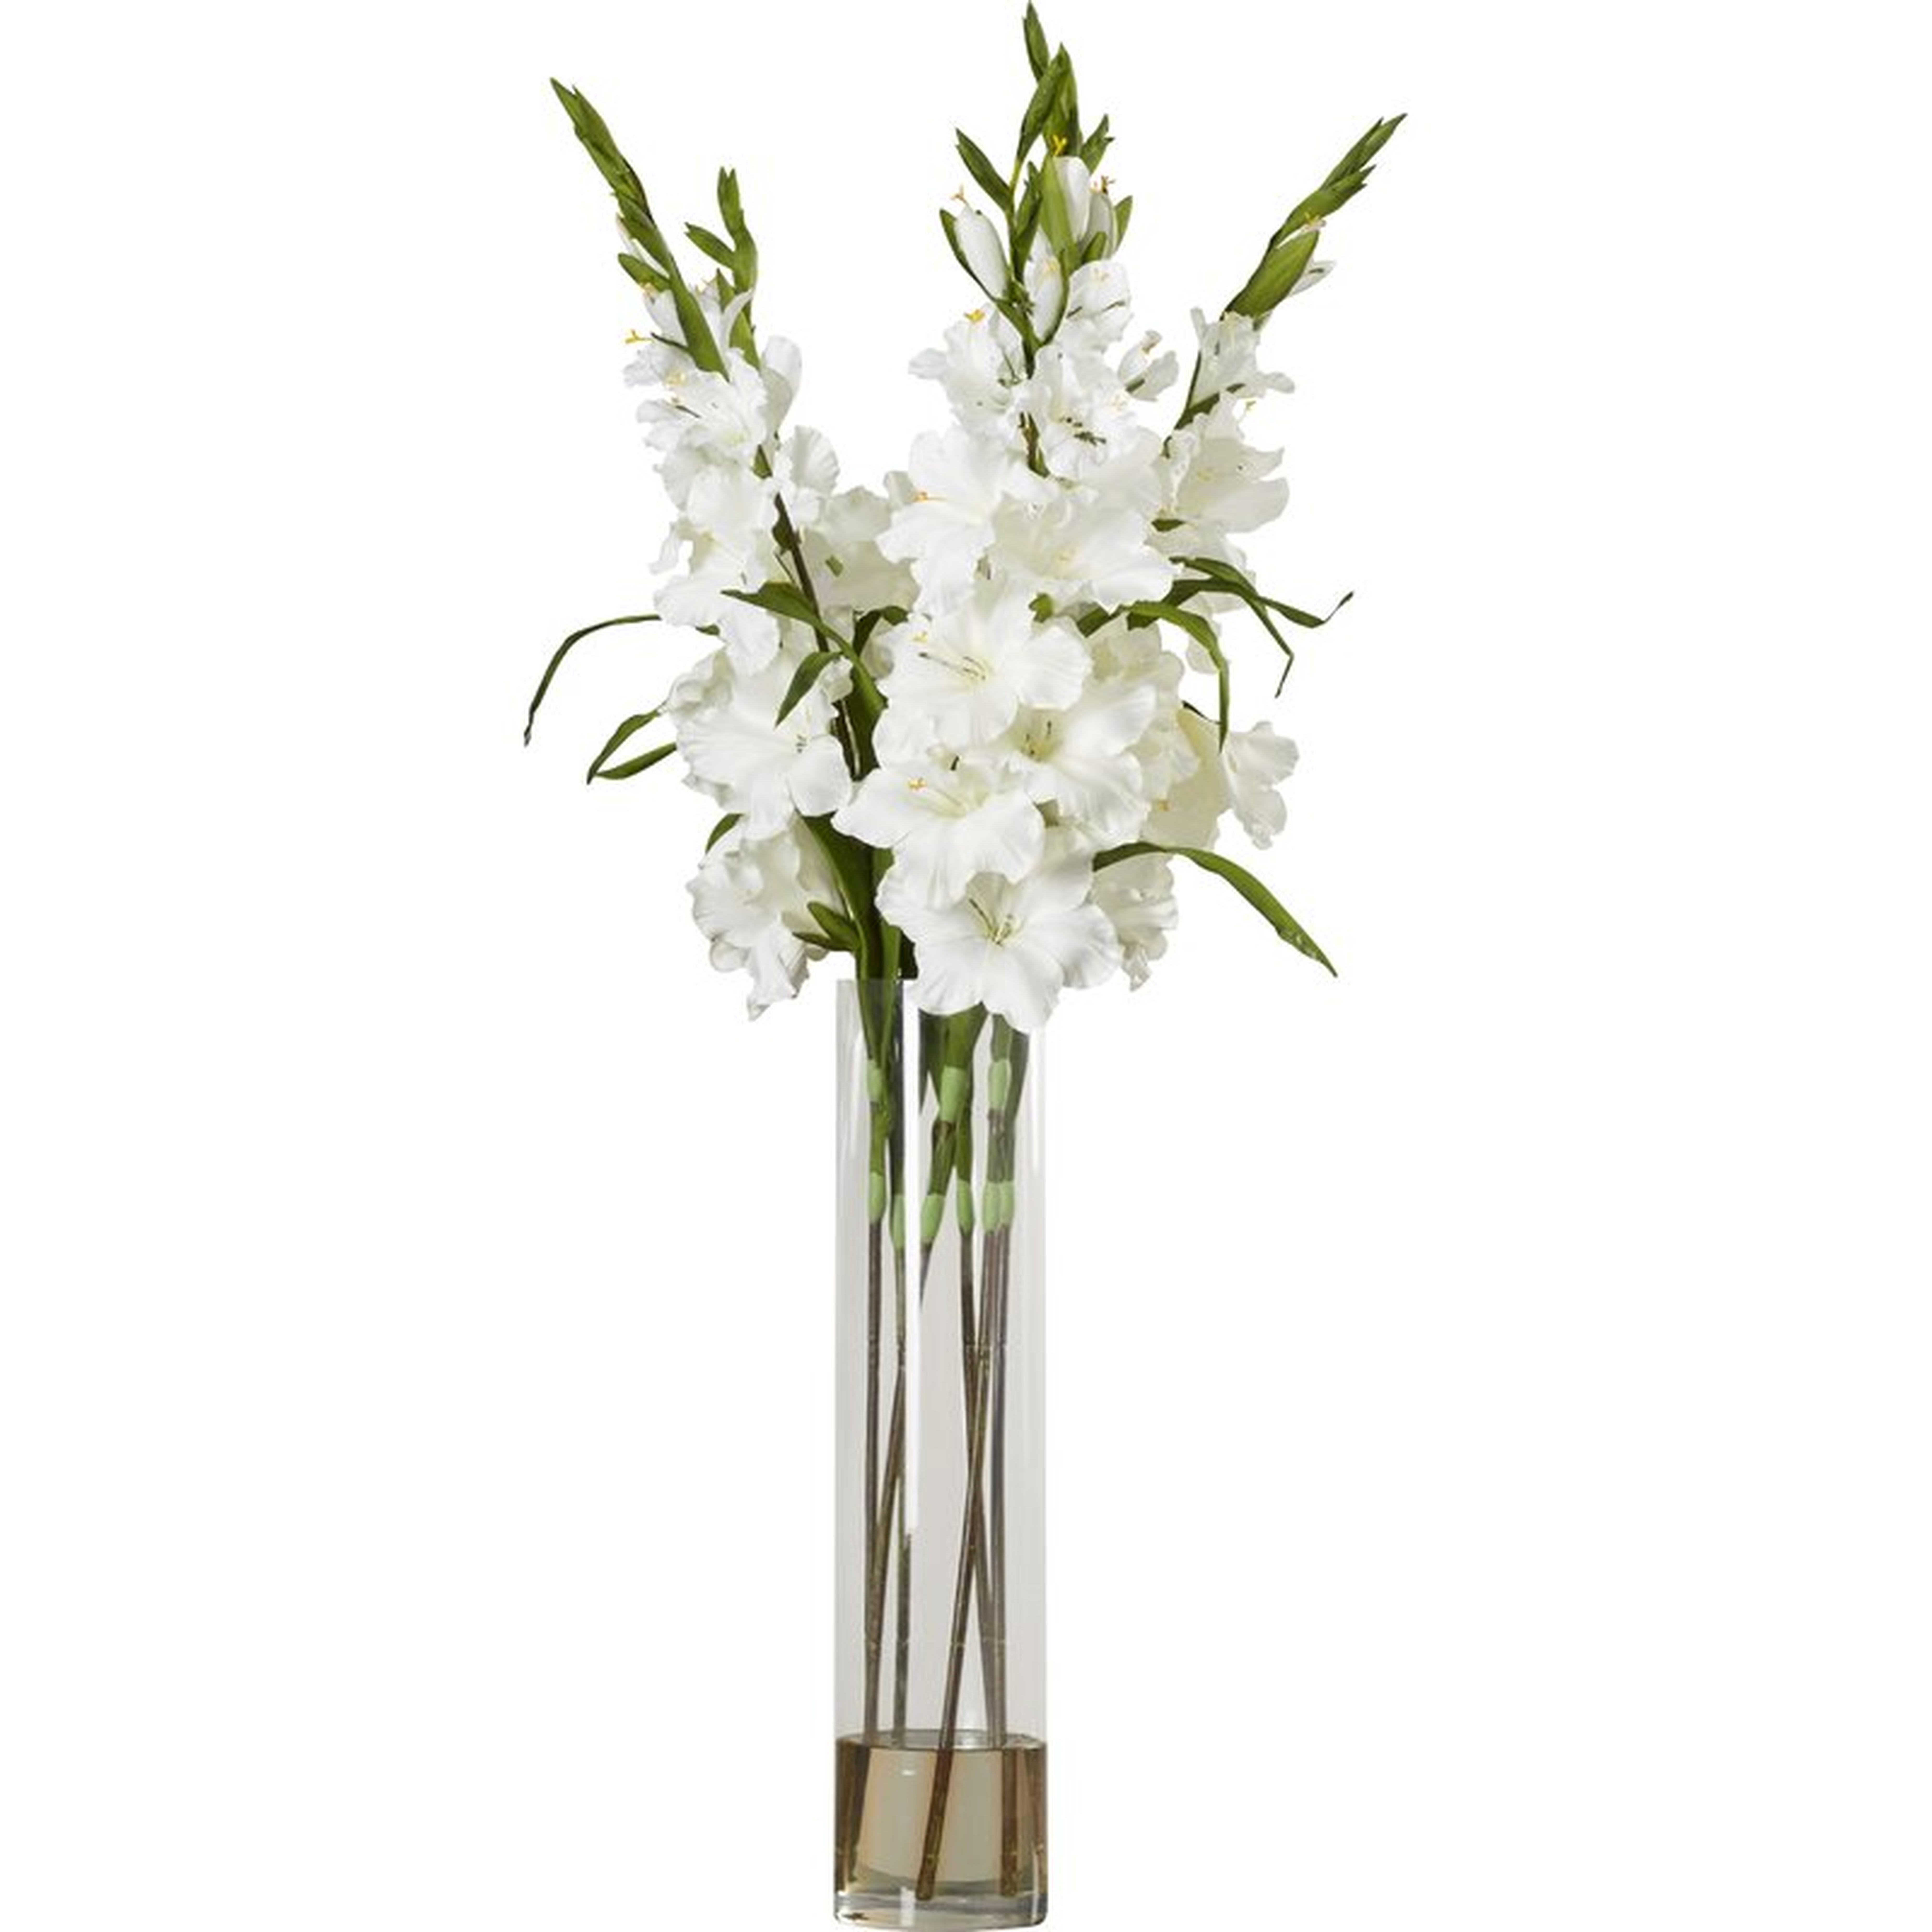 Gladiola Mixed Floral Arrangement in Vase - Wayfair